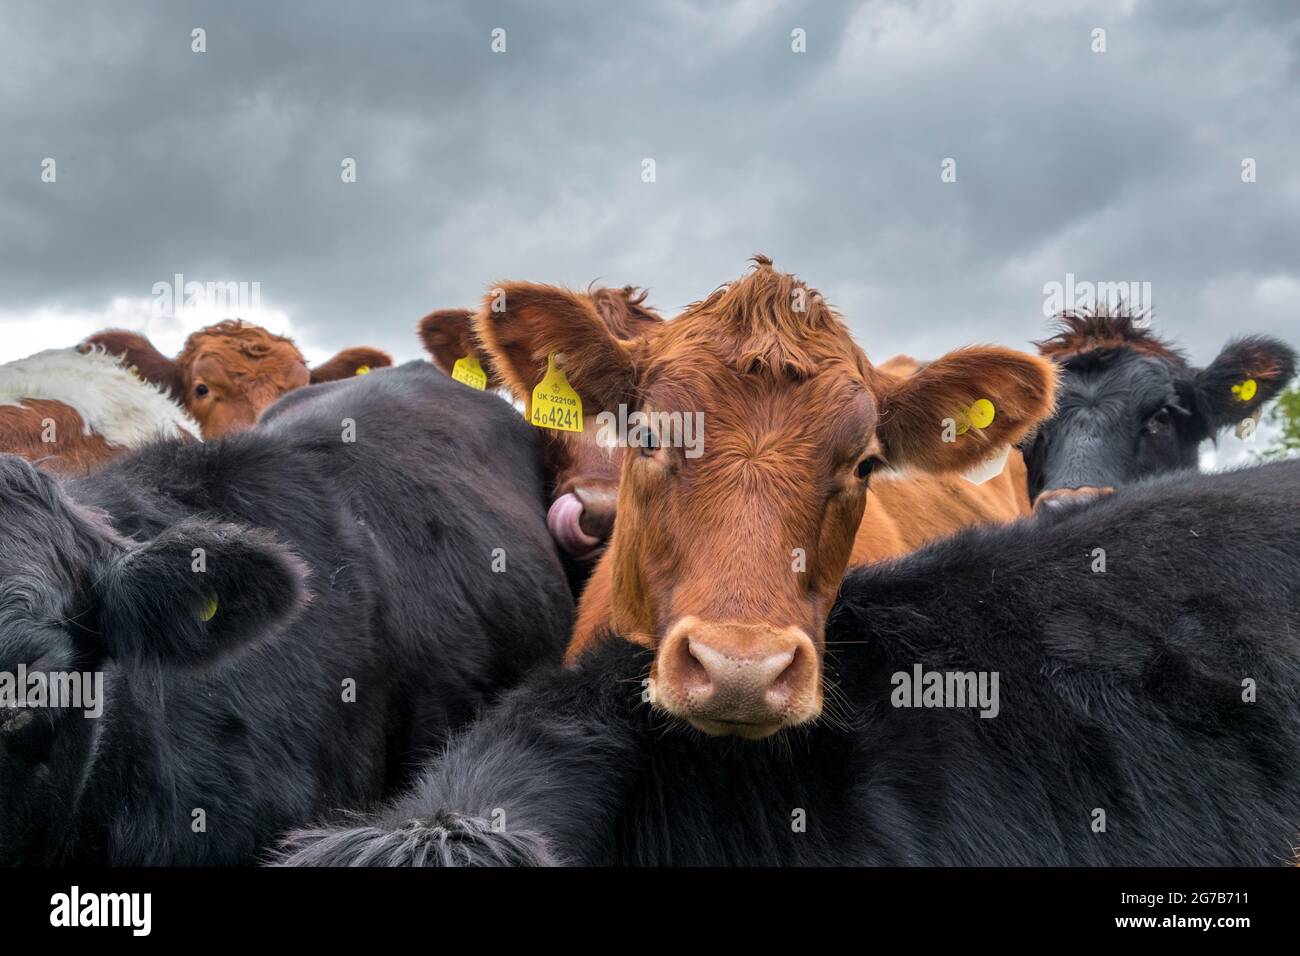 Beef cattle, bullocks or steers. Suffolk, UK. Stock Photo